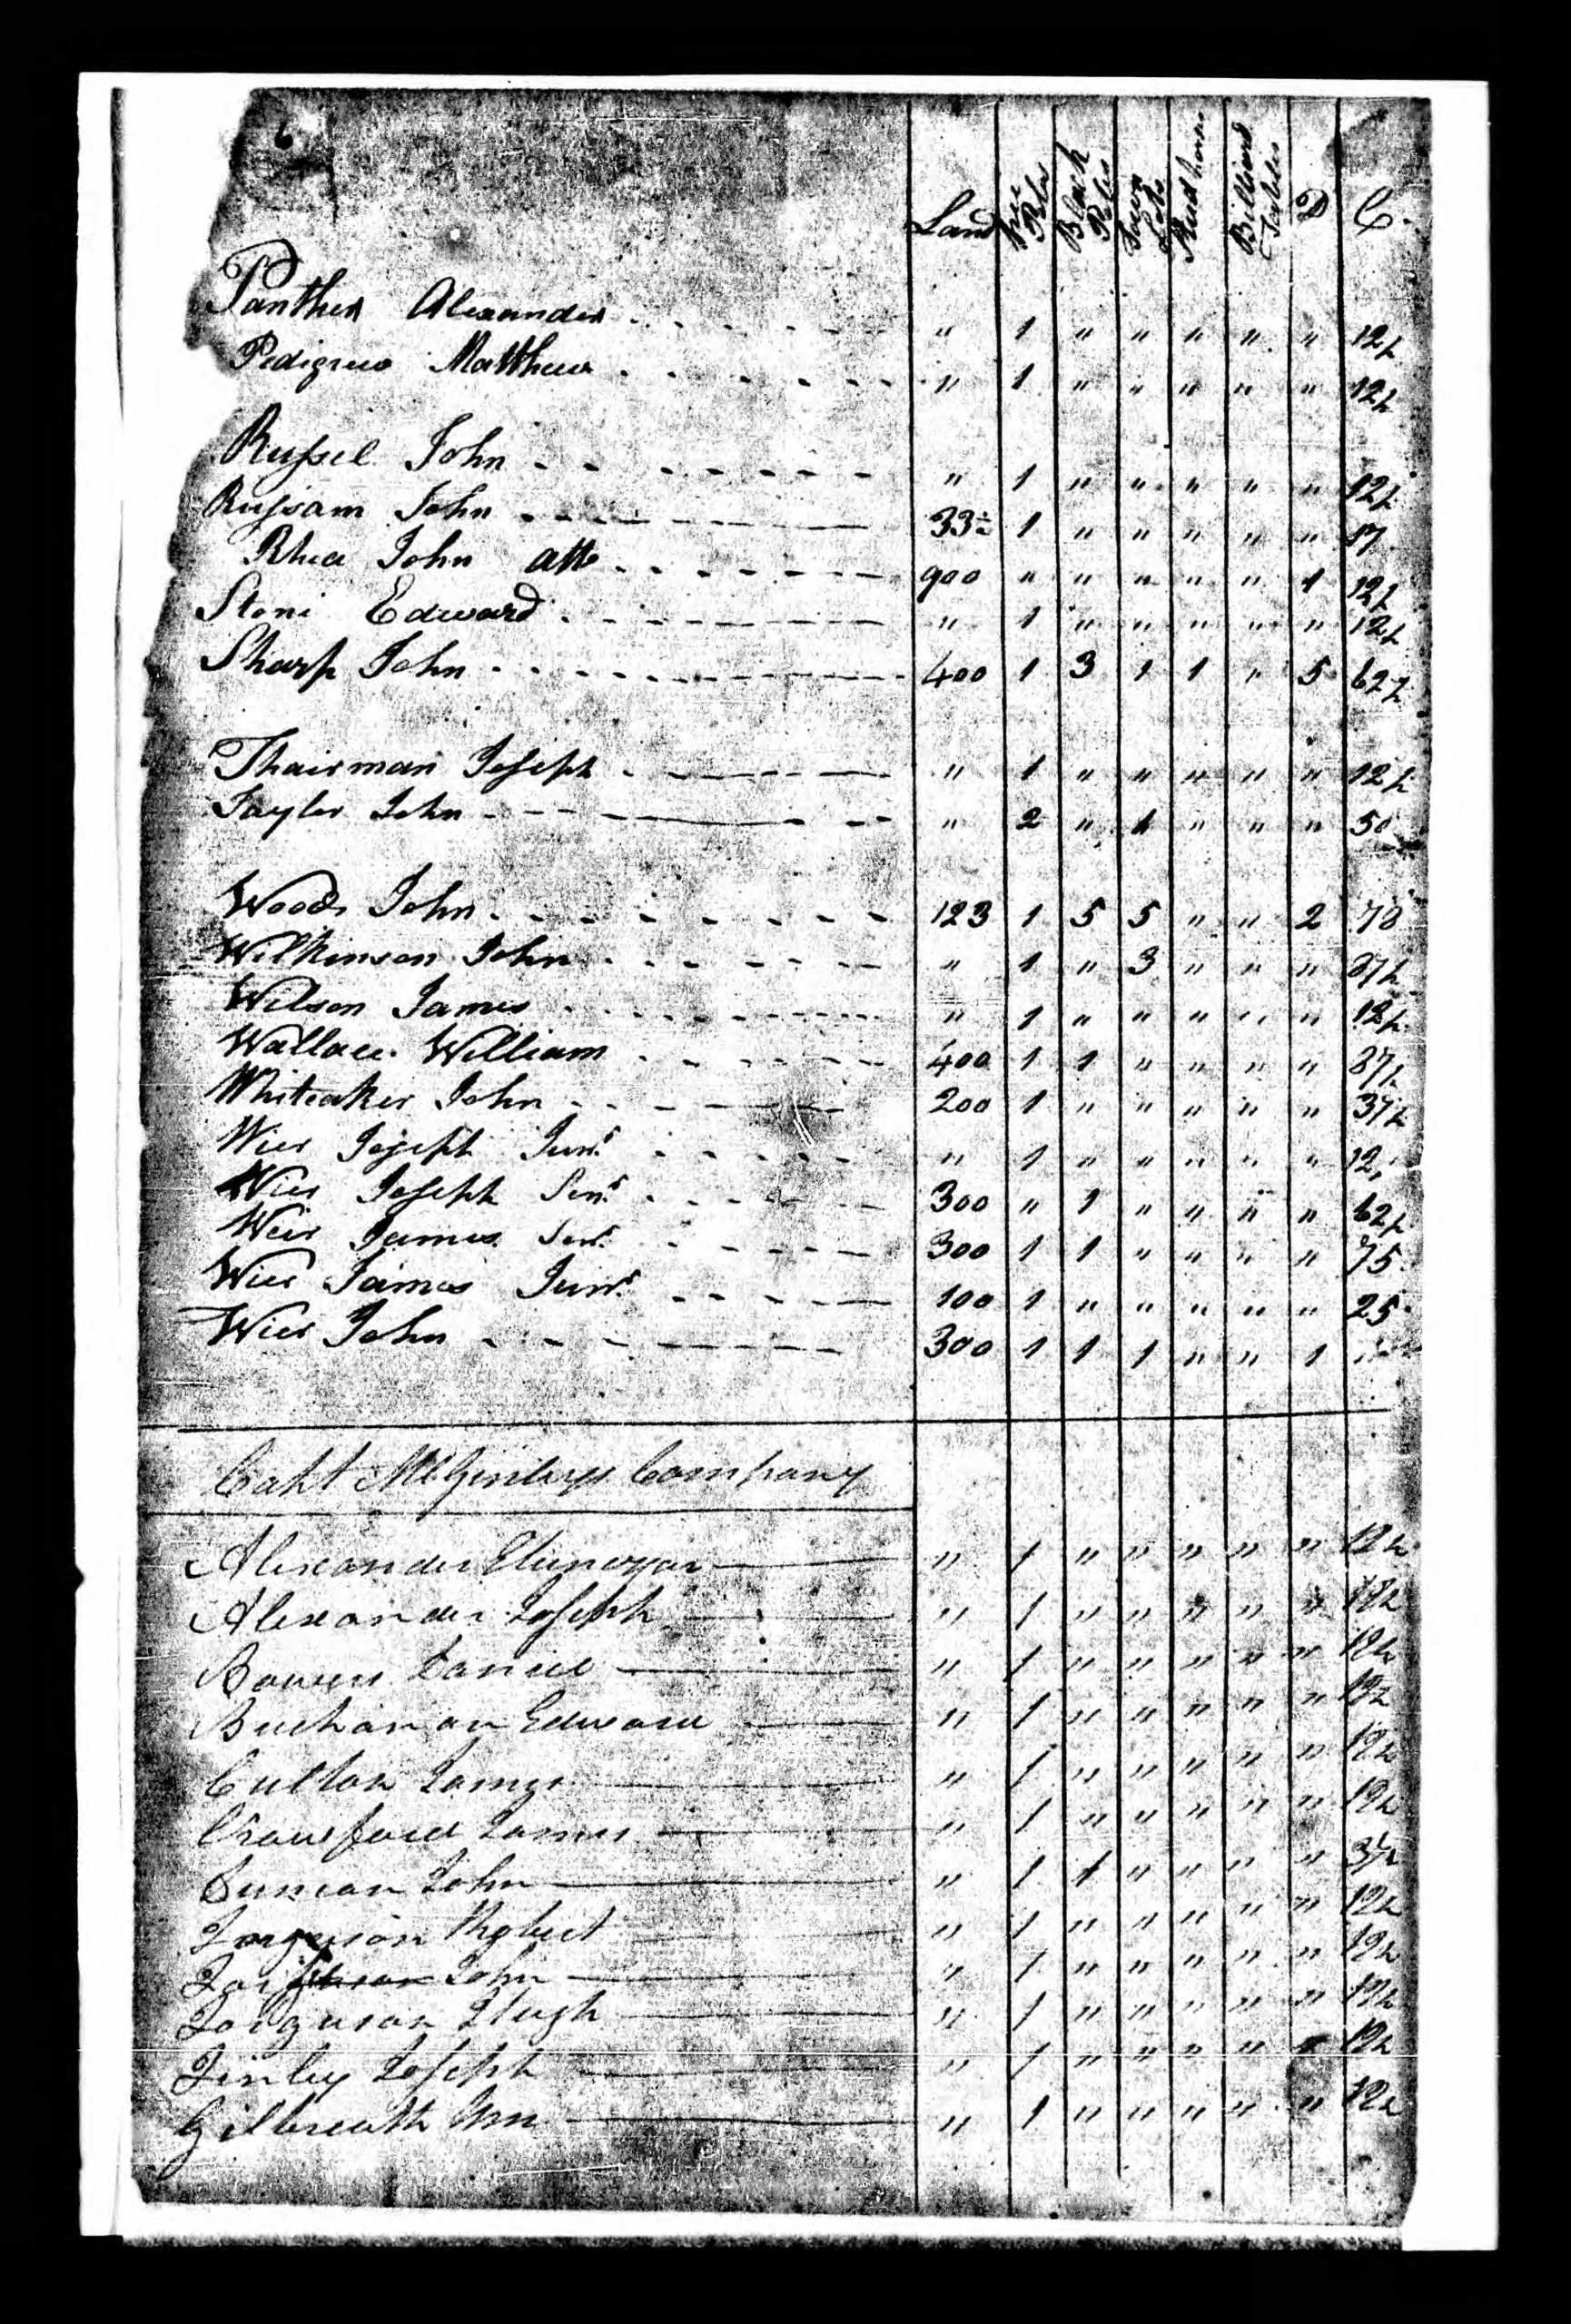 Blount County TN 1801 Tax List - Page 06